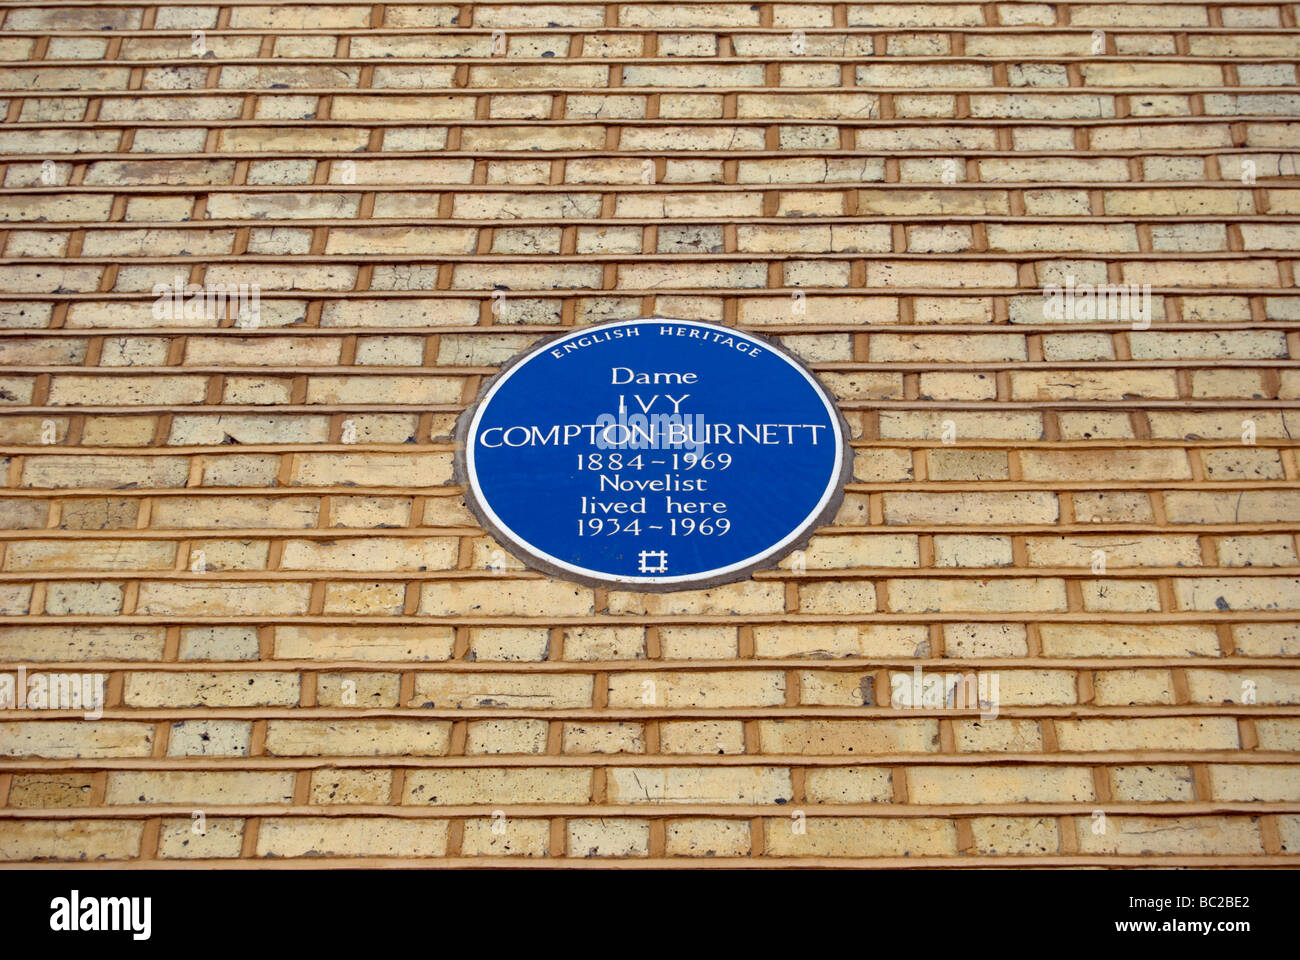 english heritage blue plaque marking a former home of novelist ivy compton-burnett Stock Photo